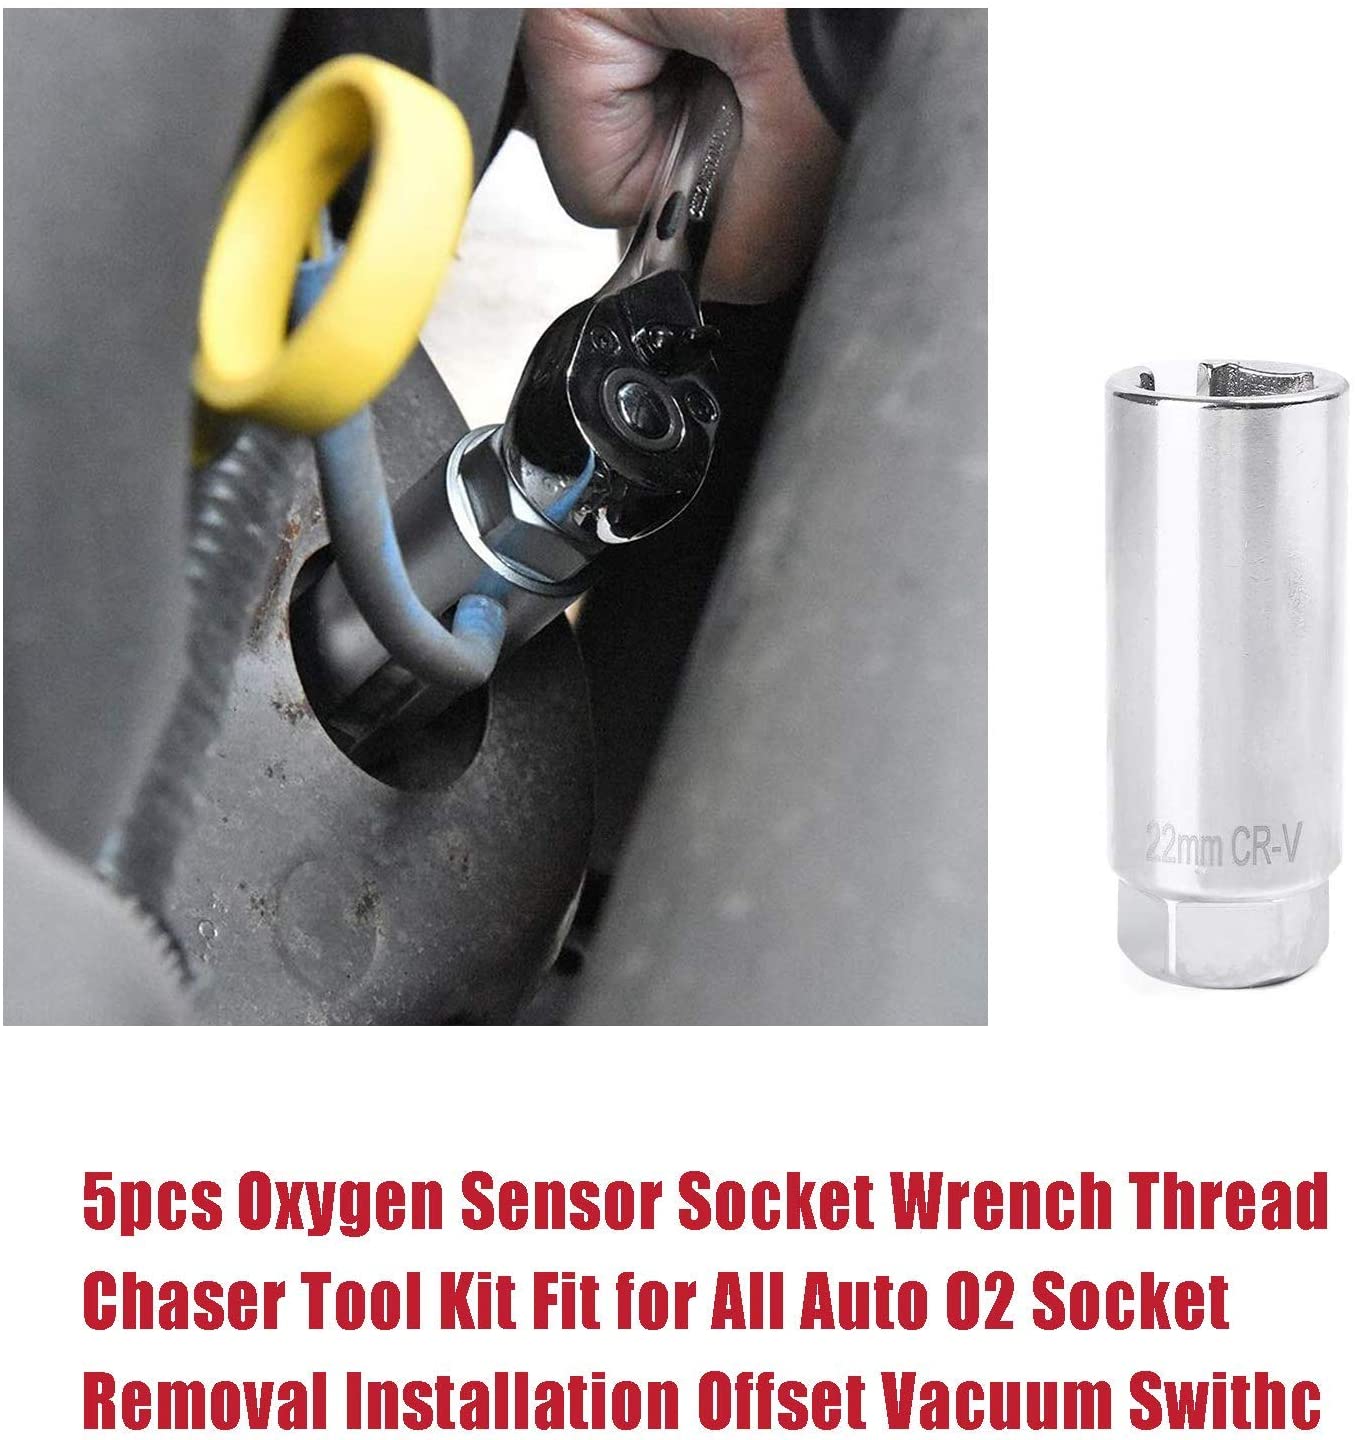 https://www.elehand.com/3pcs-oxygen-sensor-socket-vacuum-switch-socket-product/